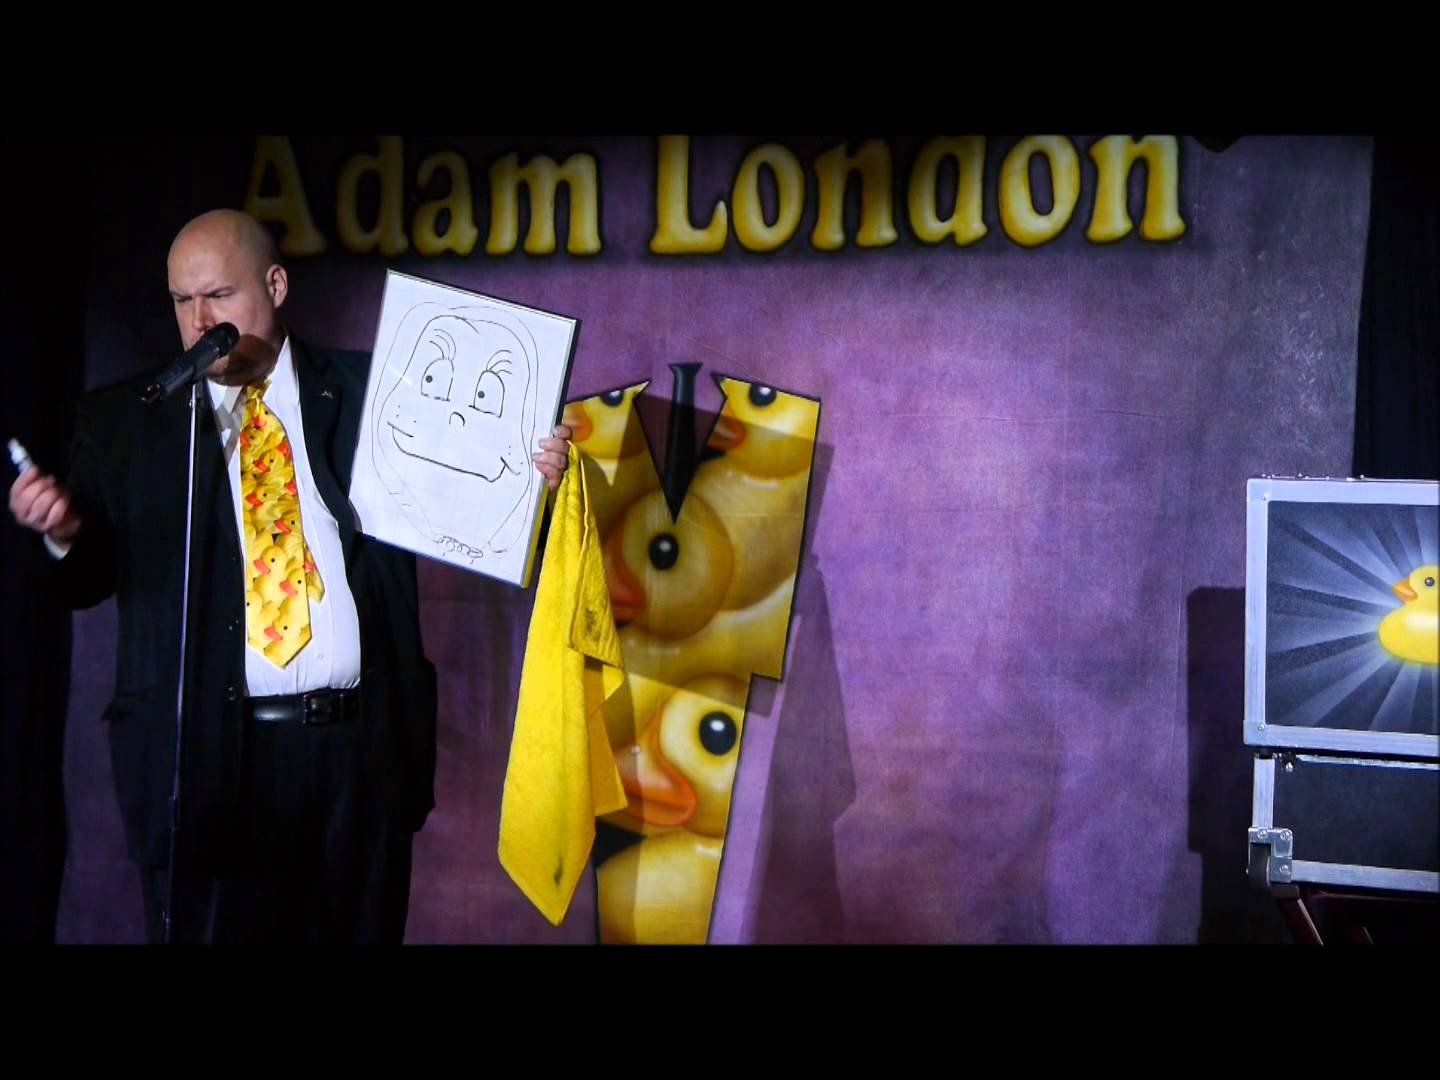 adam london vegas shows